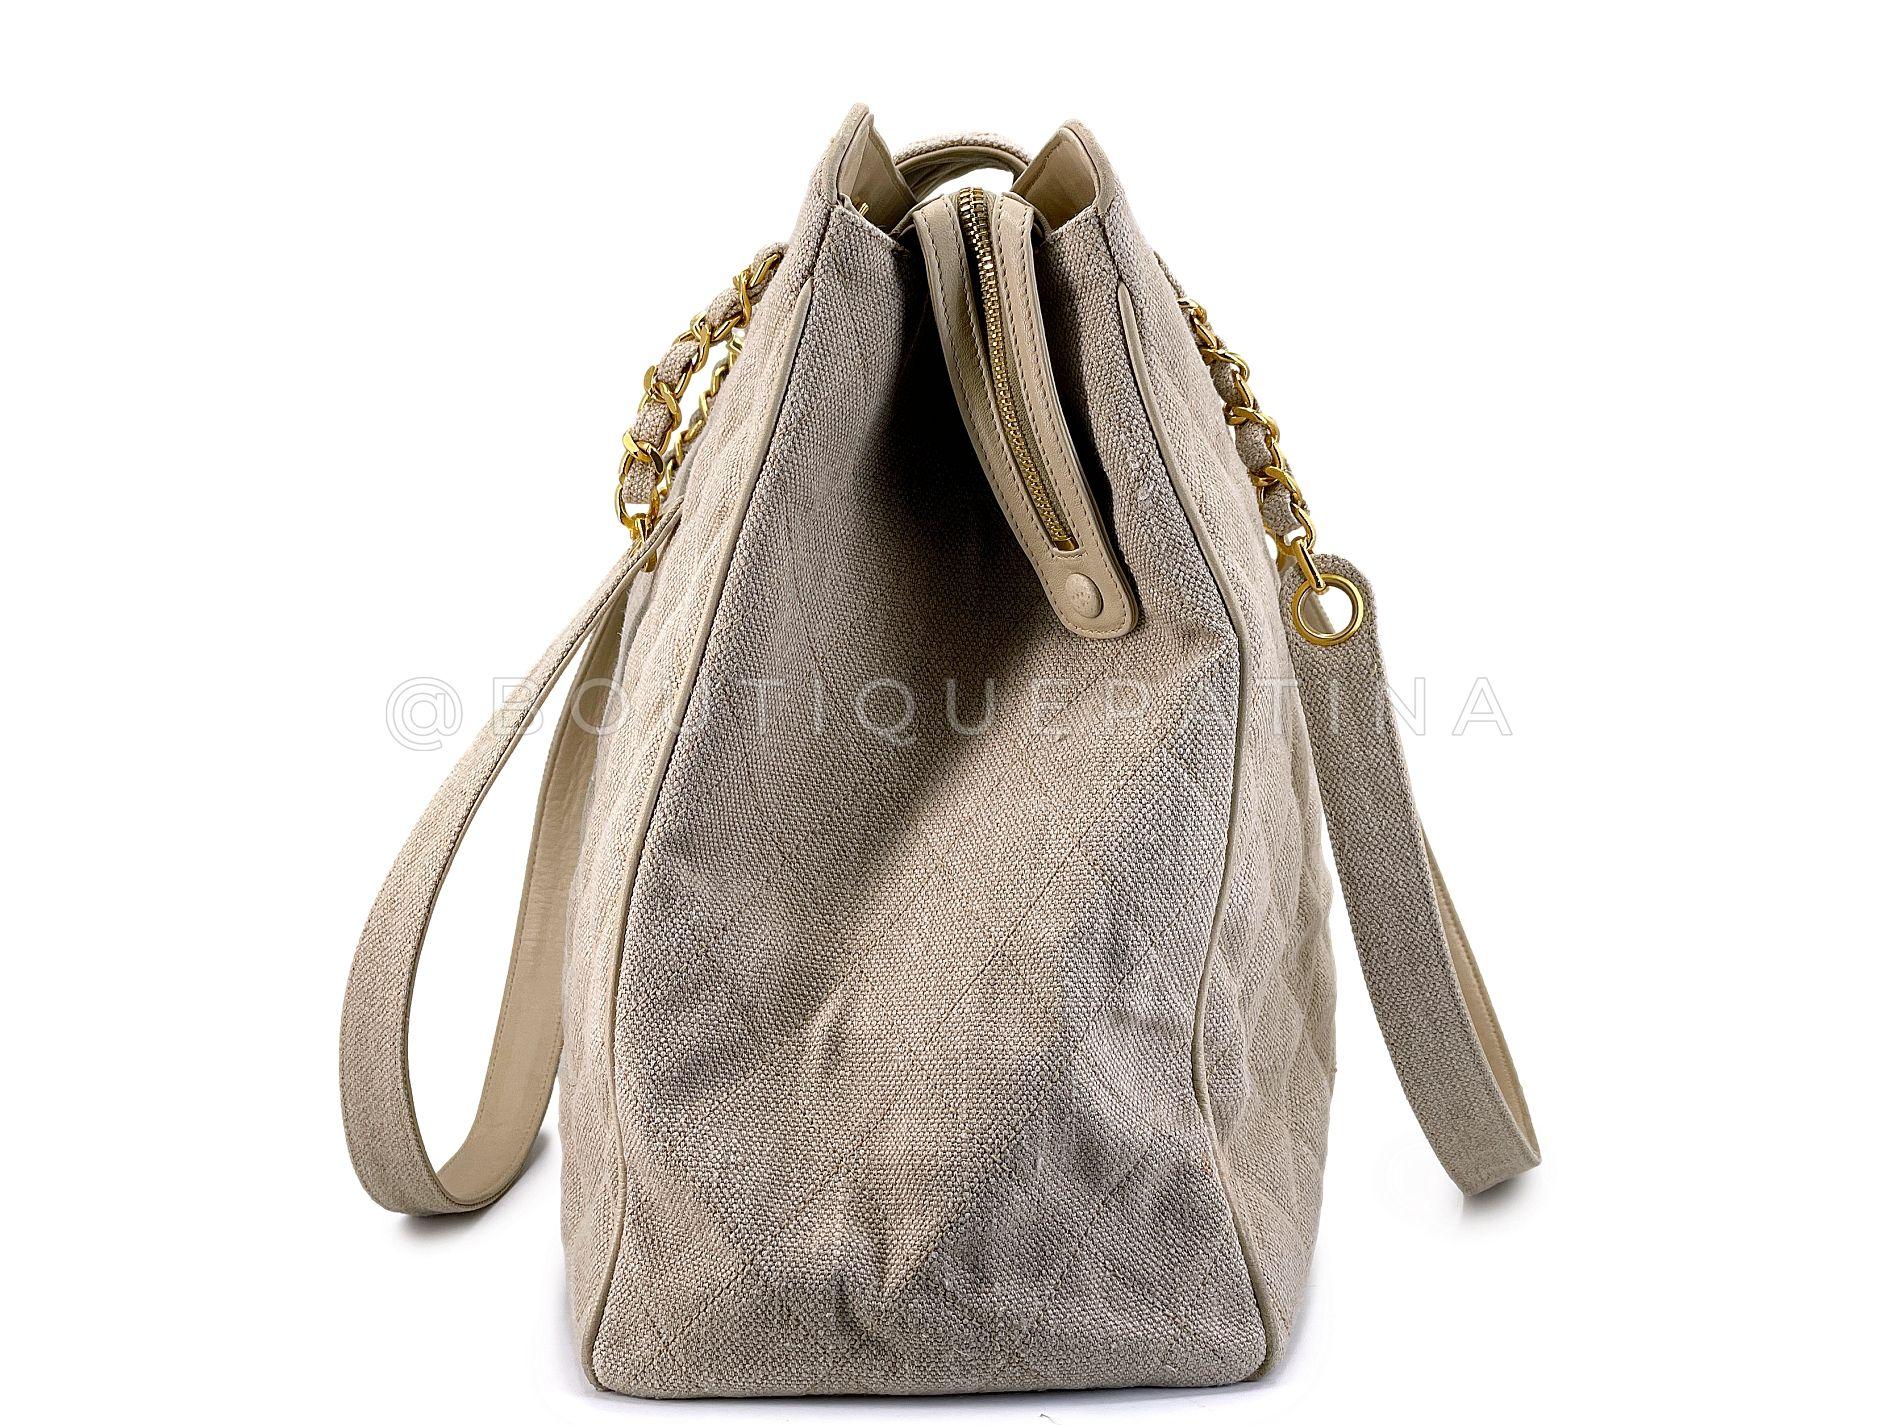 Women's Chanel Vintage Supermodel Taupe Beige Linen XL Weekender Tote Bag 24k GHW 68015 For Sale